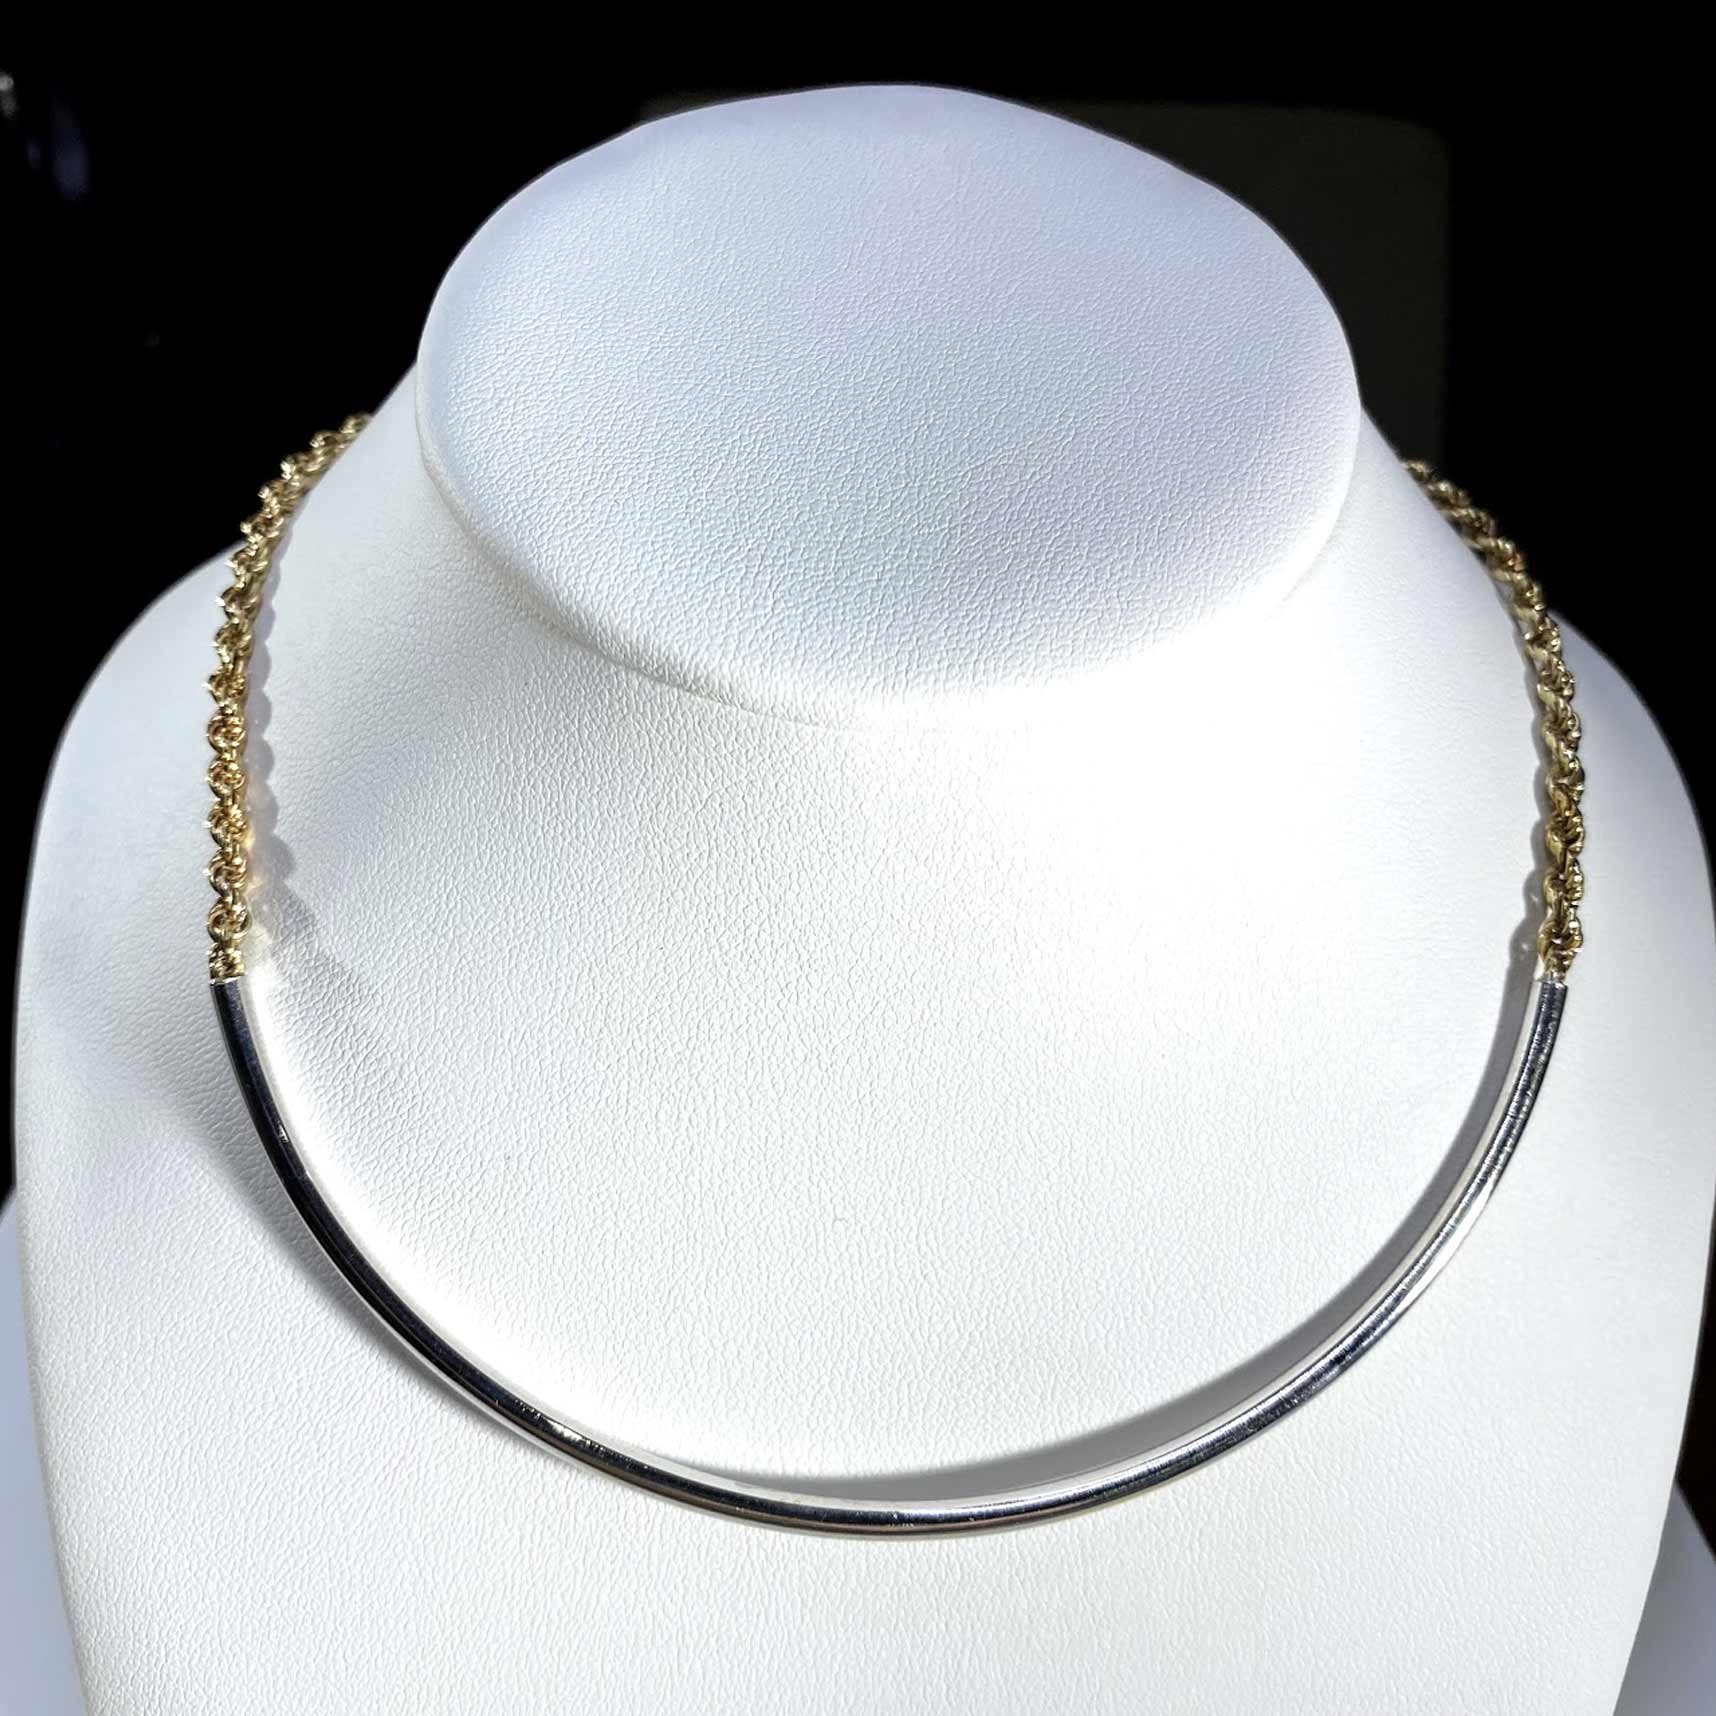 Buy 14 Karat White Gold Omega Necklace Online in India - Etsy